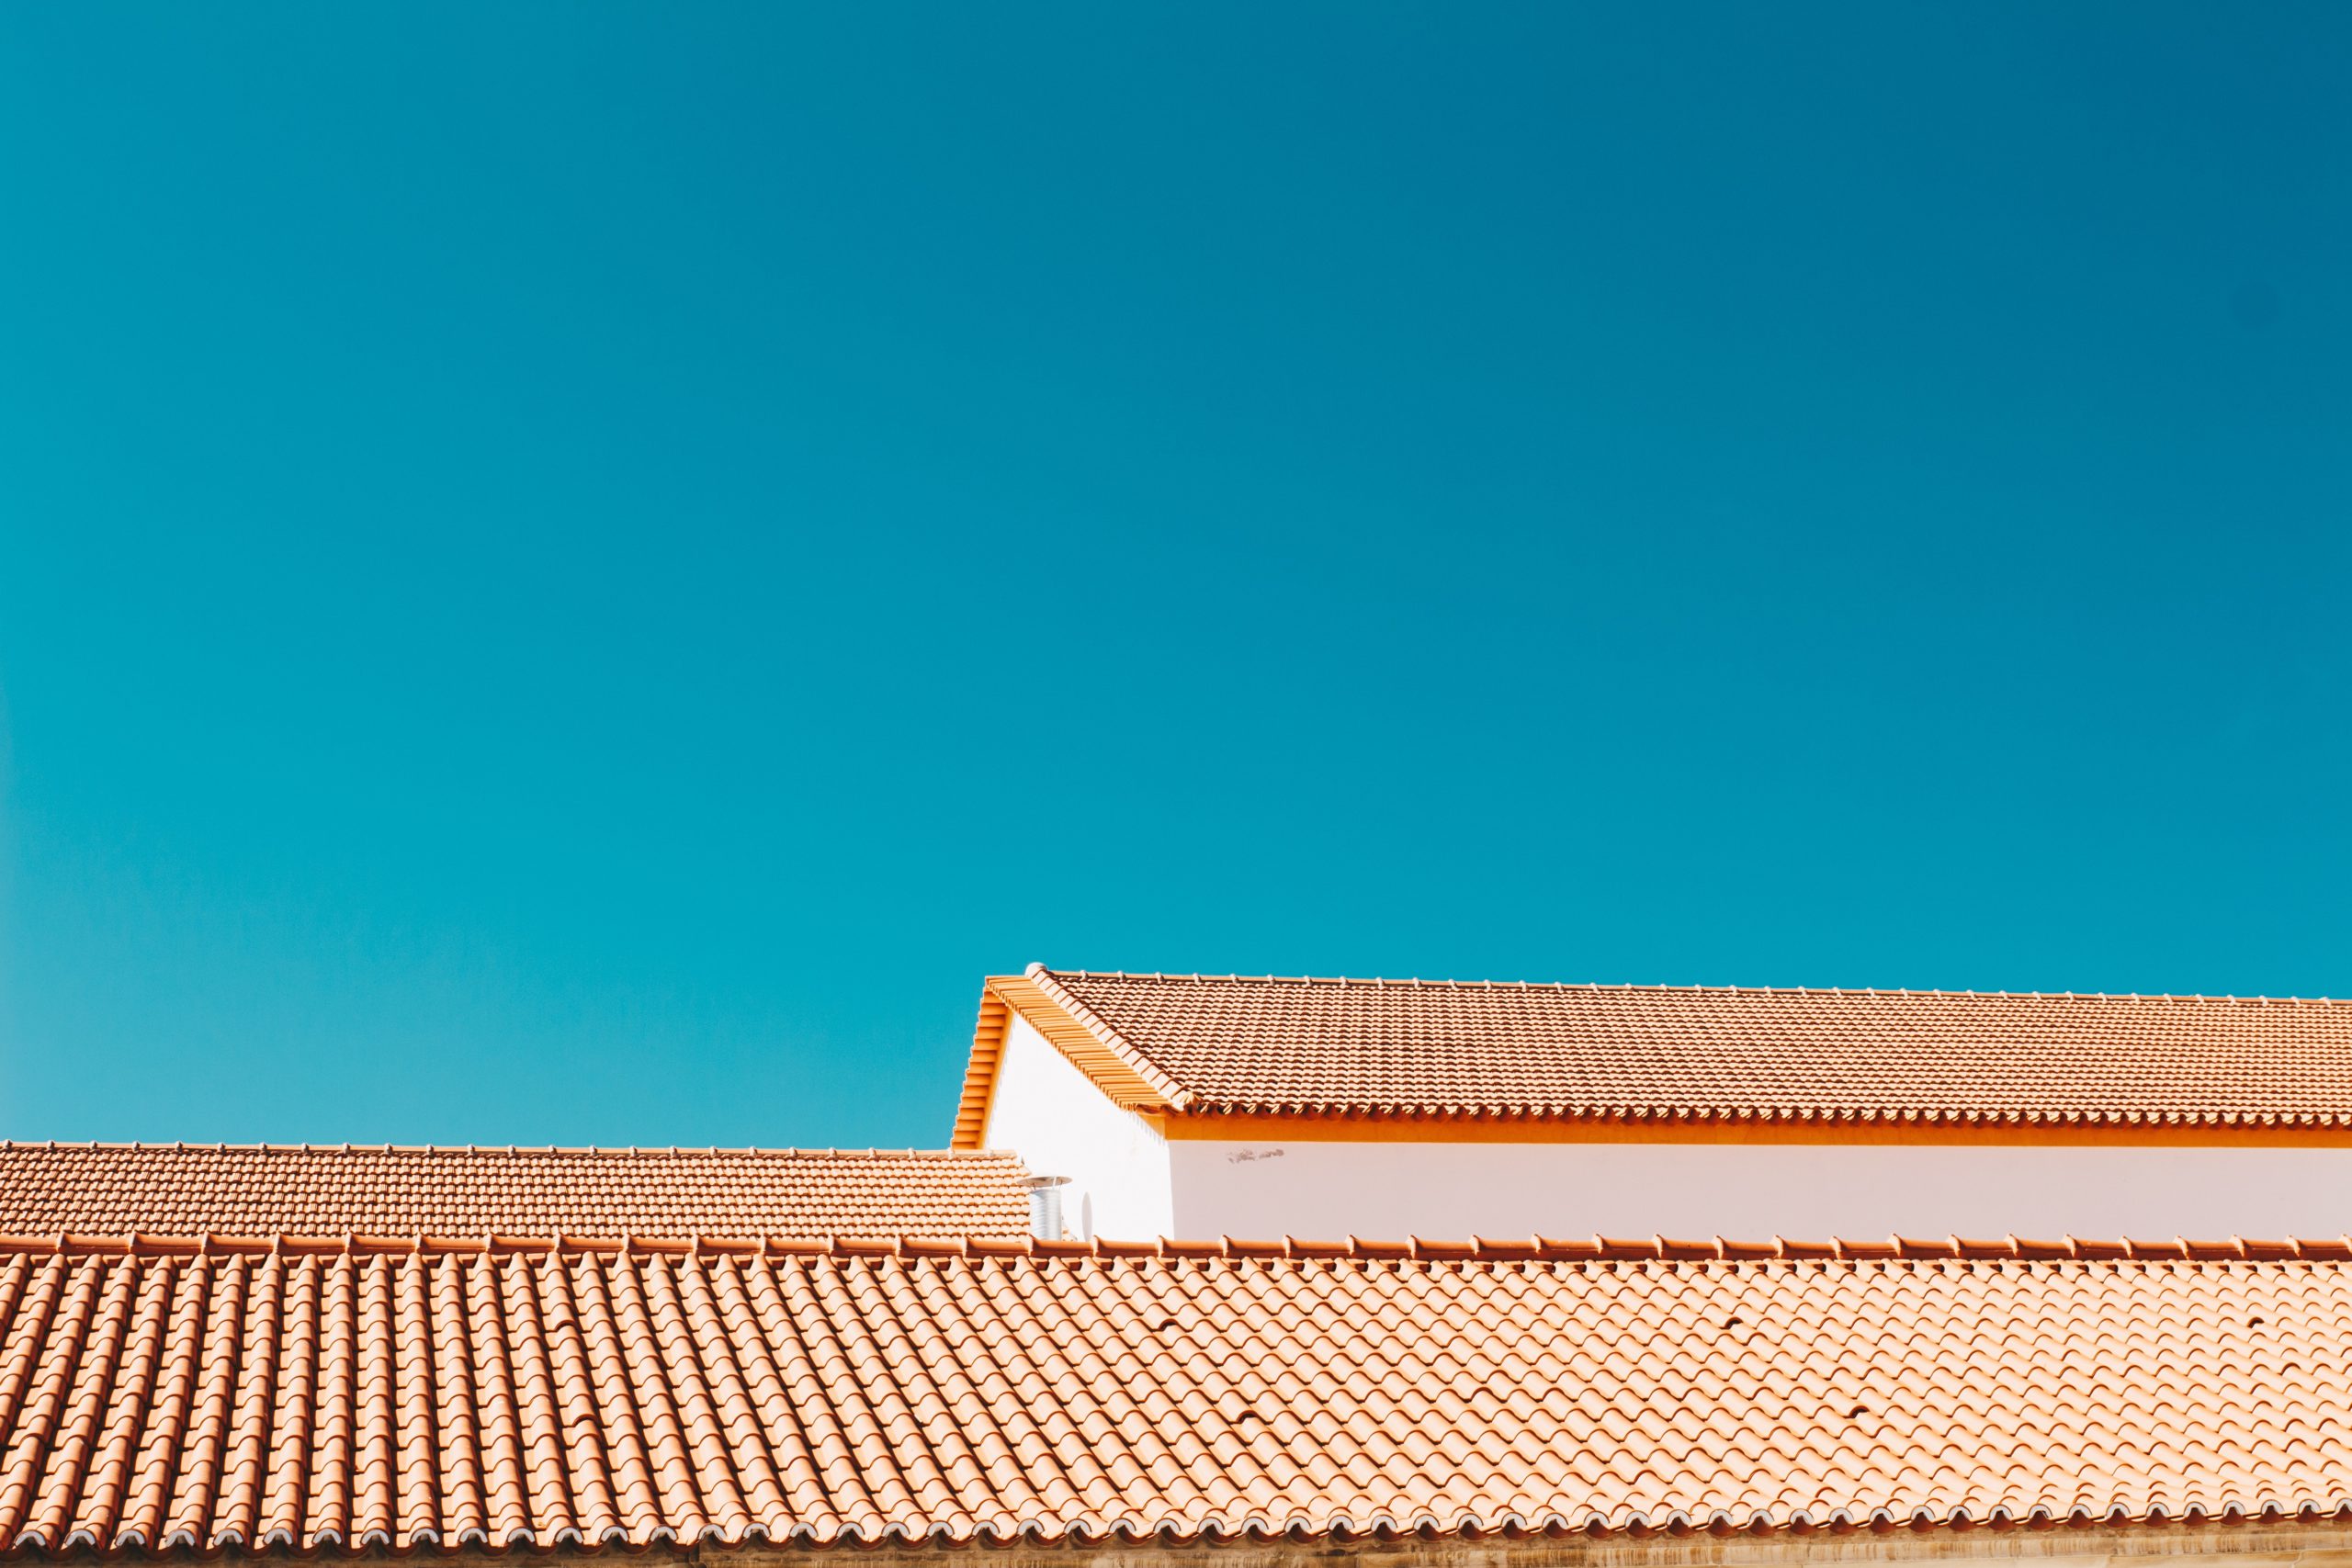 Roof with Orange Tiles